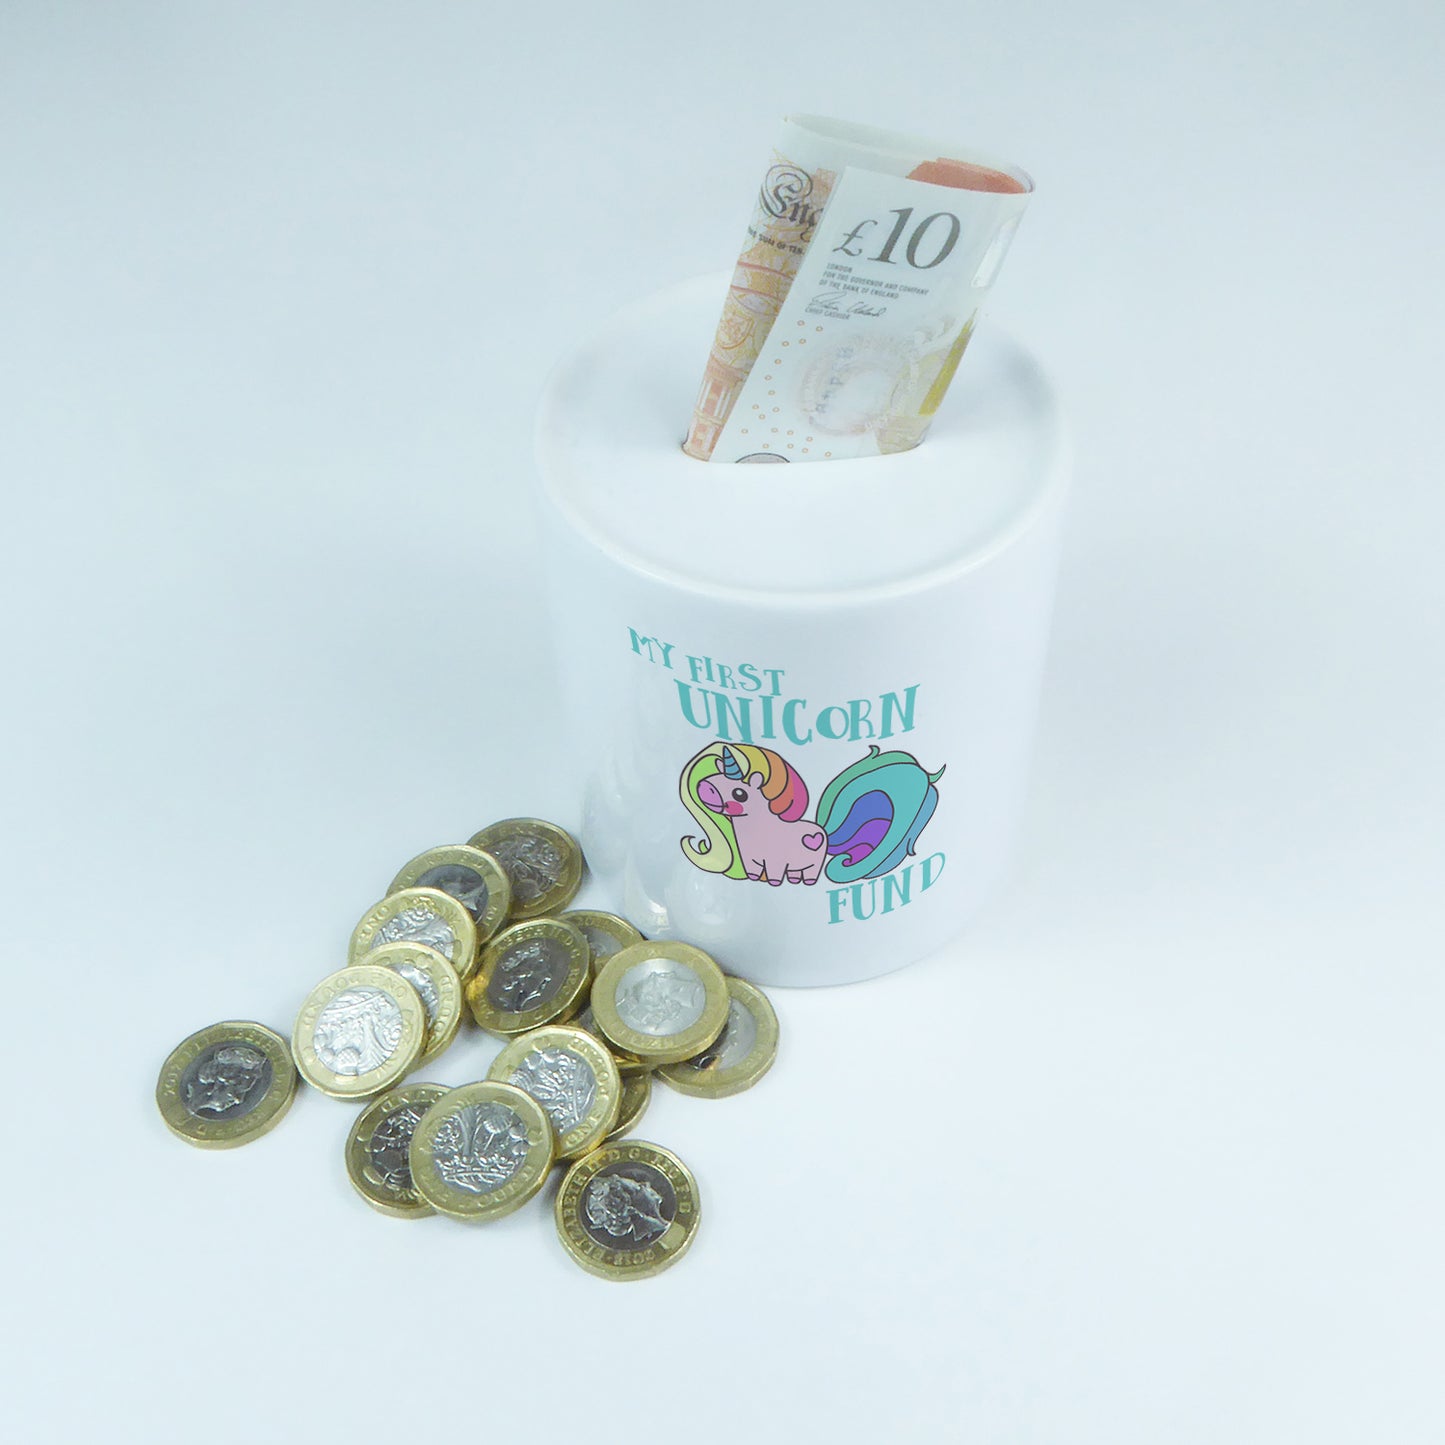 My first unicorn fund | Ceramic money box - Adnil Creations